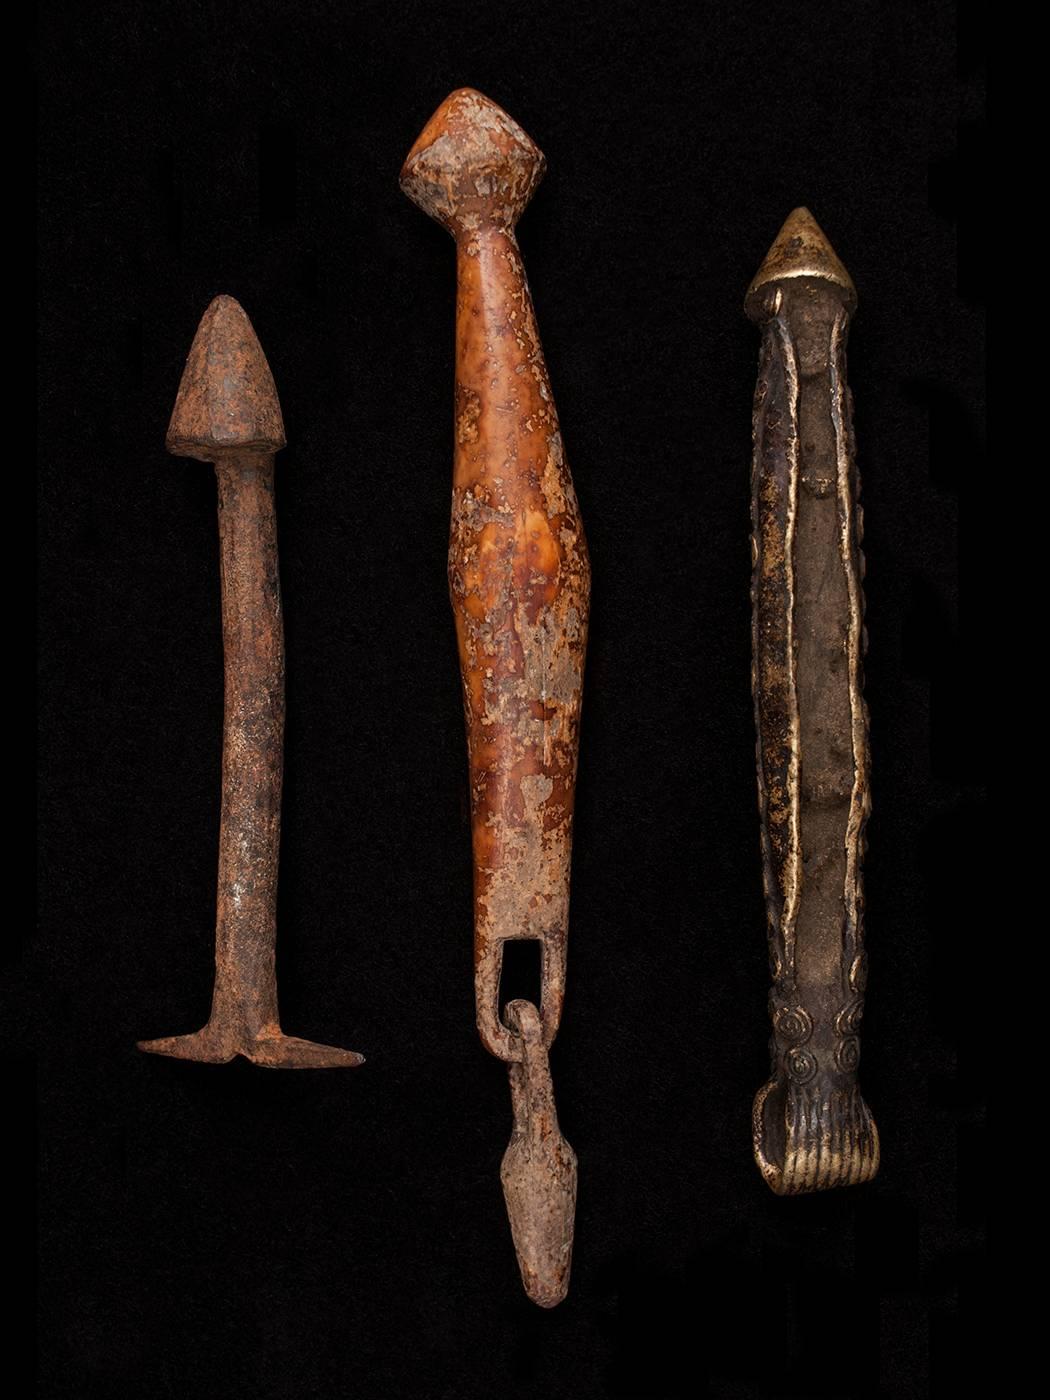 Offered by Zena Kruzick
Early 20th century tribal phallic amulets, Burkina Faso

Measures: 6